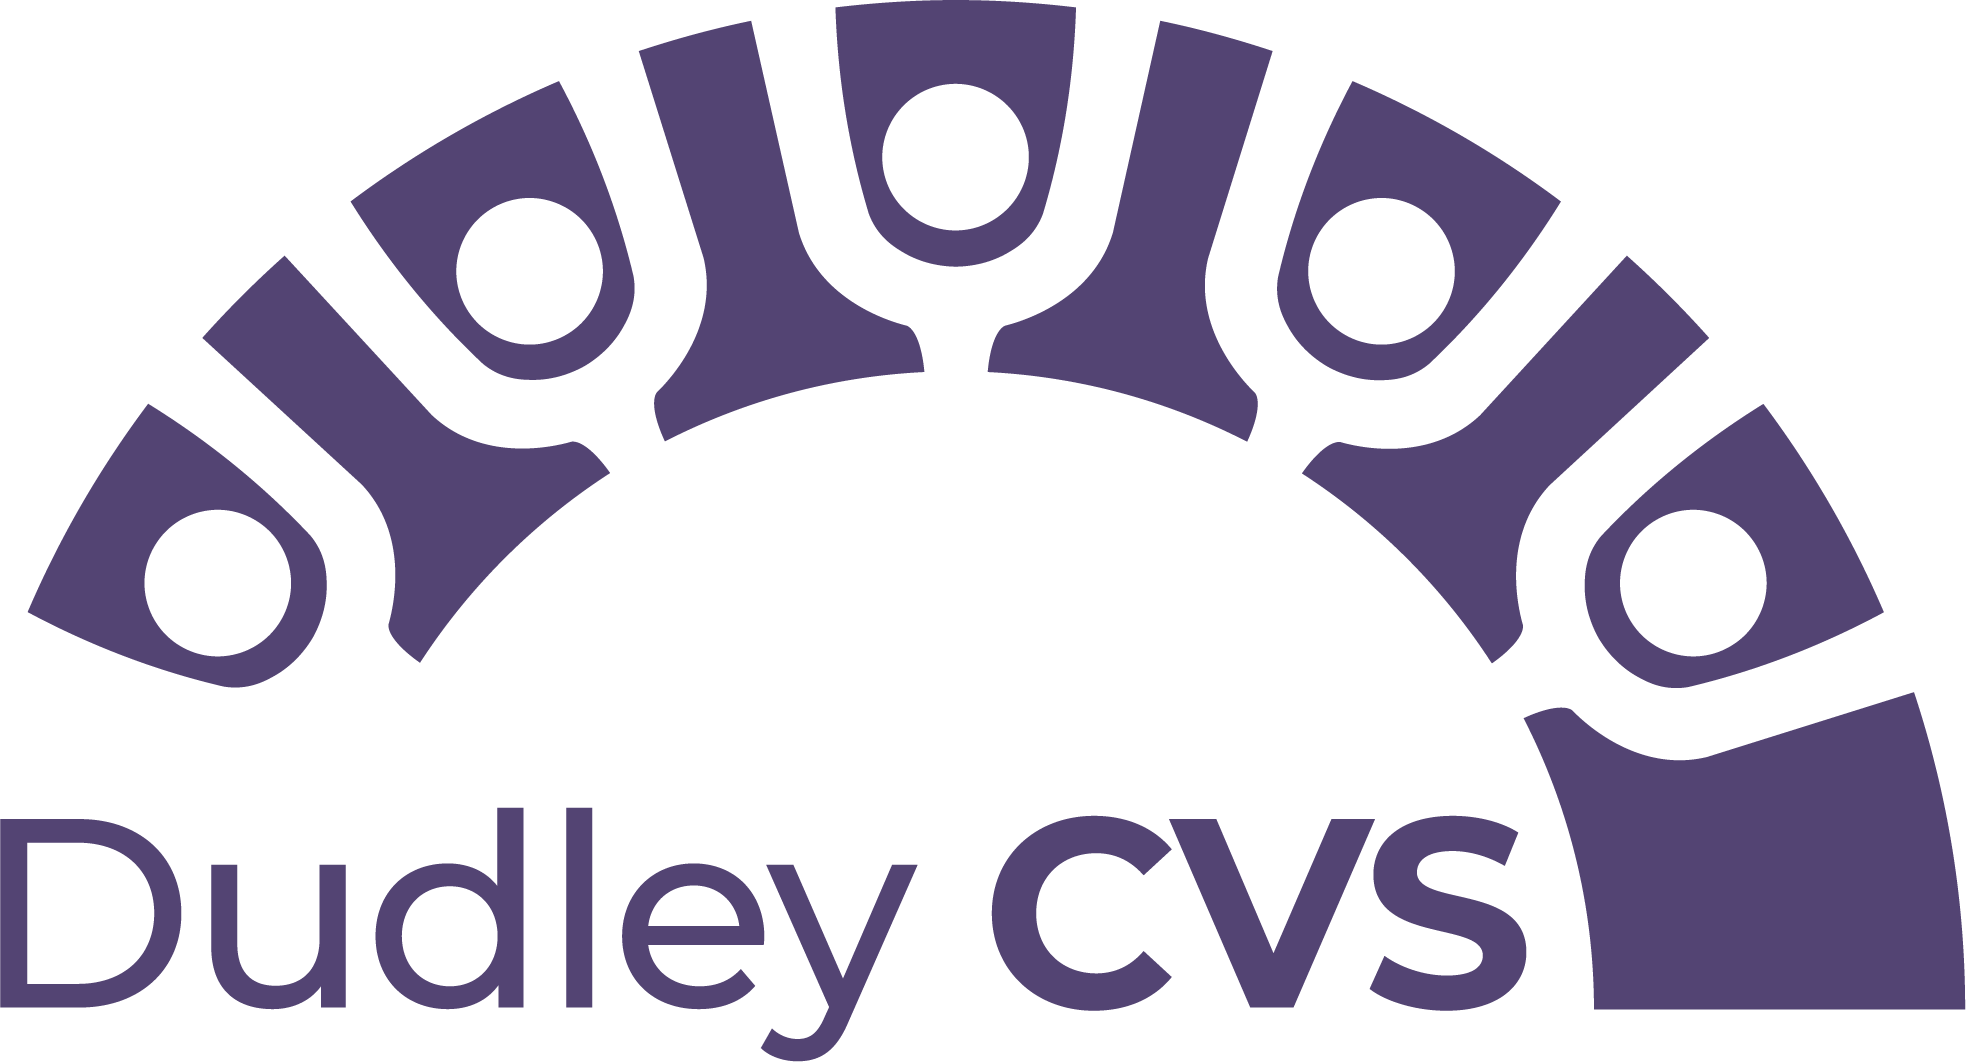 Dudley CVS Volunteer Centre